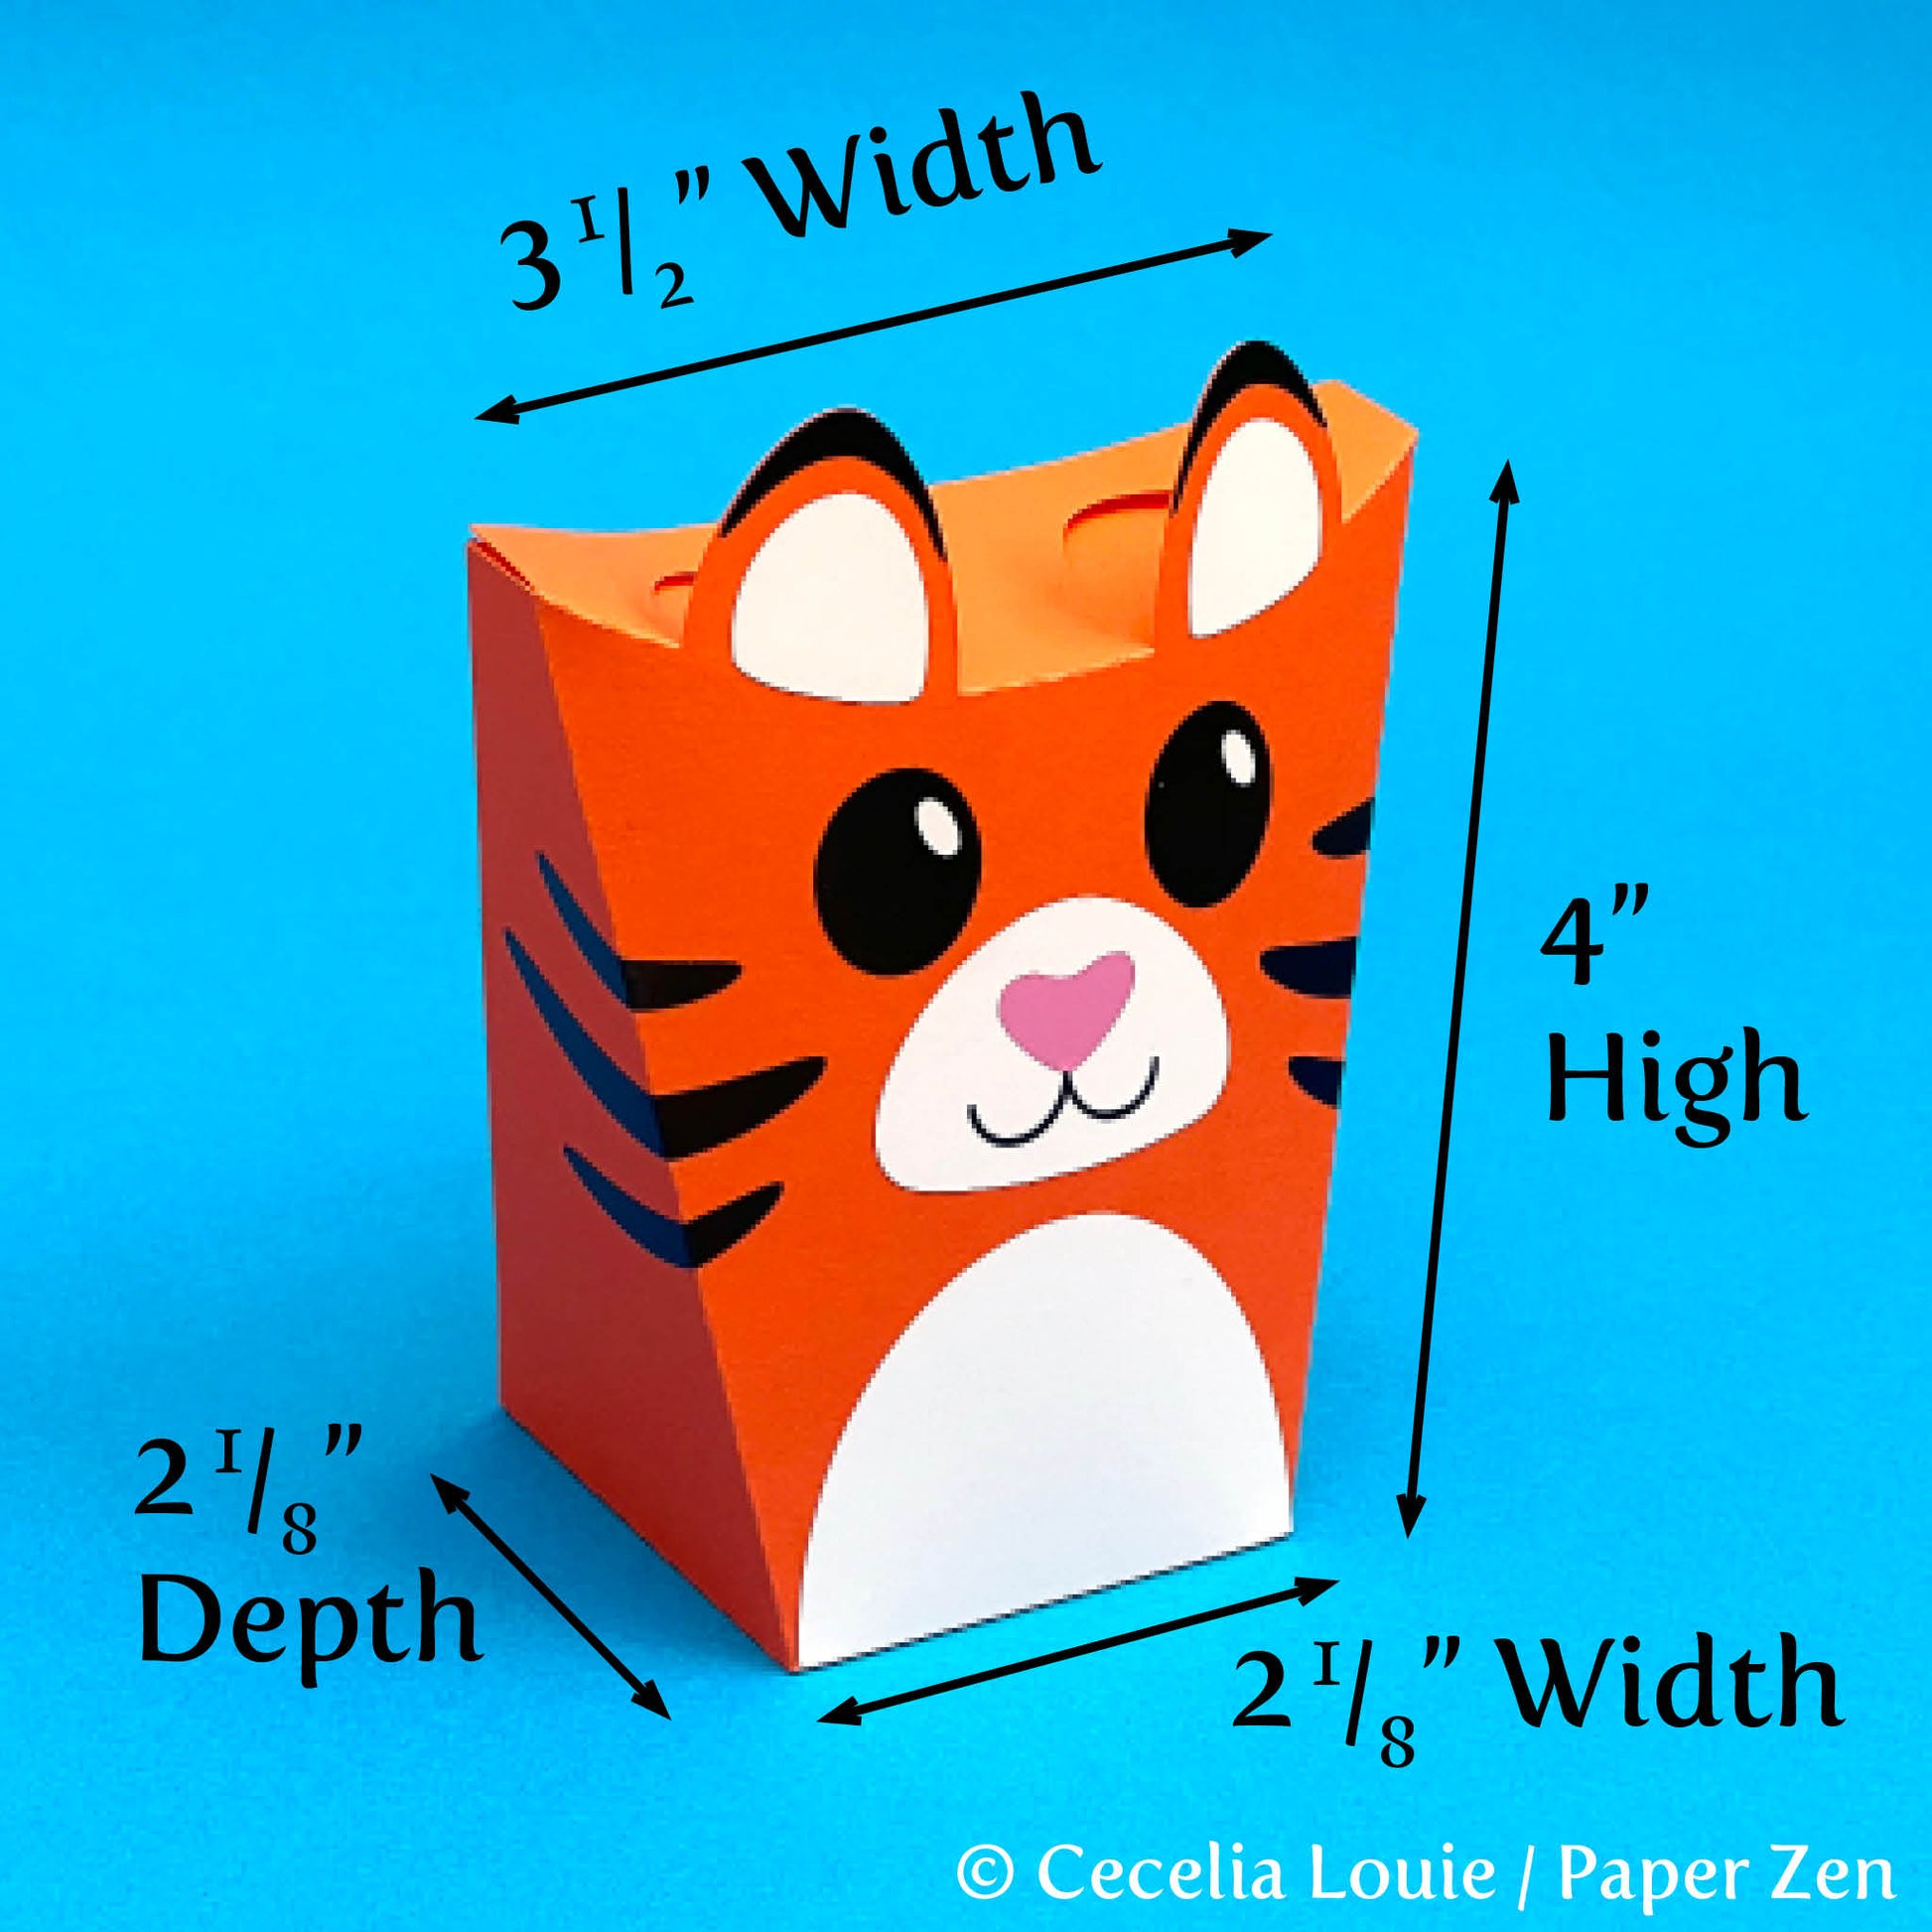 Tiger Gift Box SVG